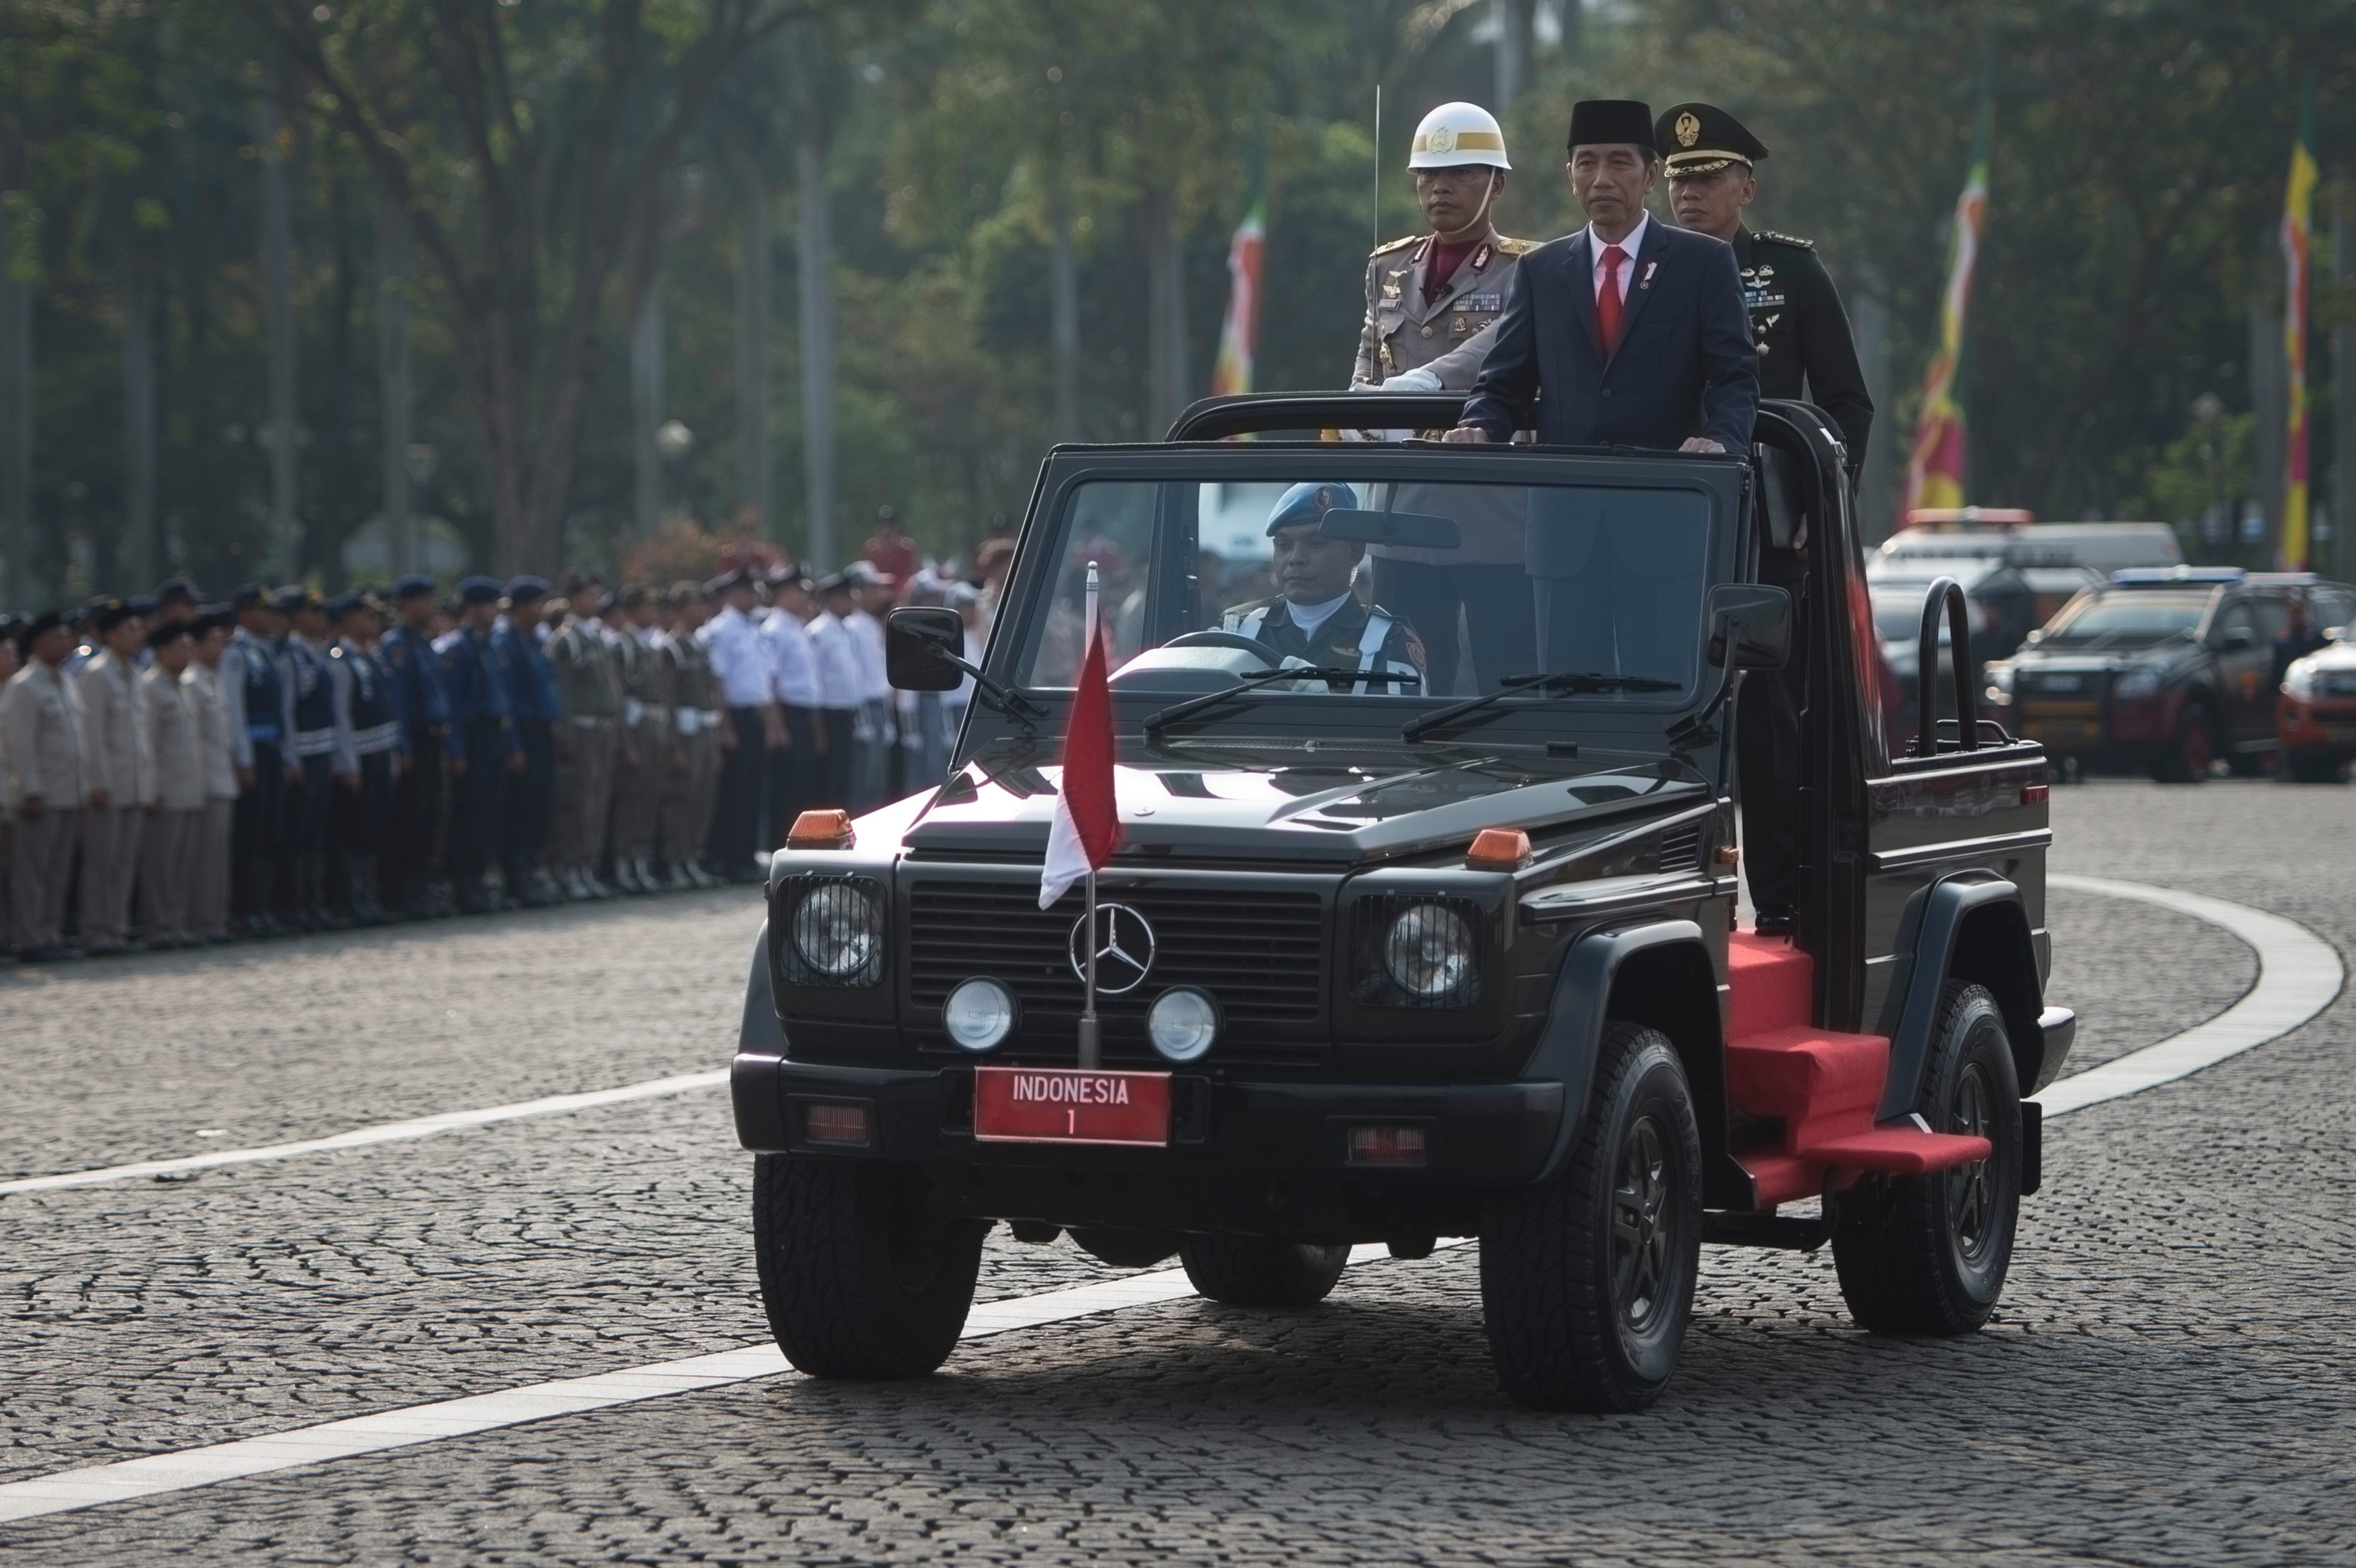 INSPEKSI. Presiden Joko Widodo (tengah) melakukan inspeksi pasukan saat peringatan HUT Ke-71 Bhayangkara di Lapangan Monas, Jakarta, Senin, 10 Juli. Foto oleh Rosa Panggabean/ANTARA 